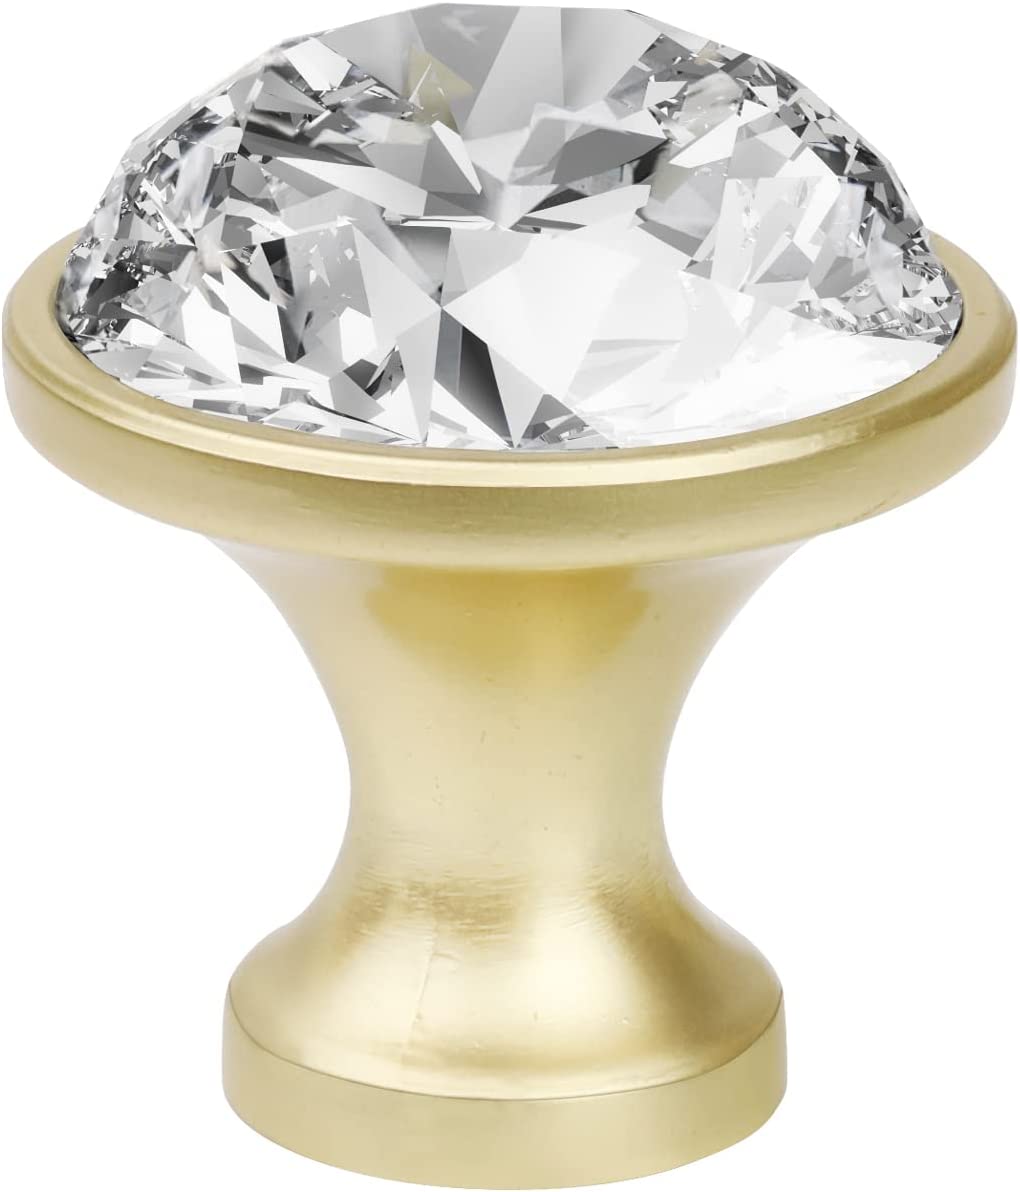 Tombol Laci Kabinet Perabot Bulat Pemegang kristal emas Tombol Imej Pilihan